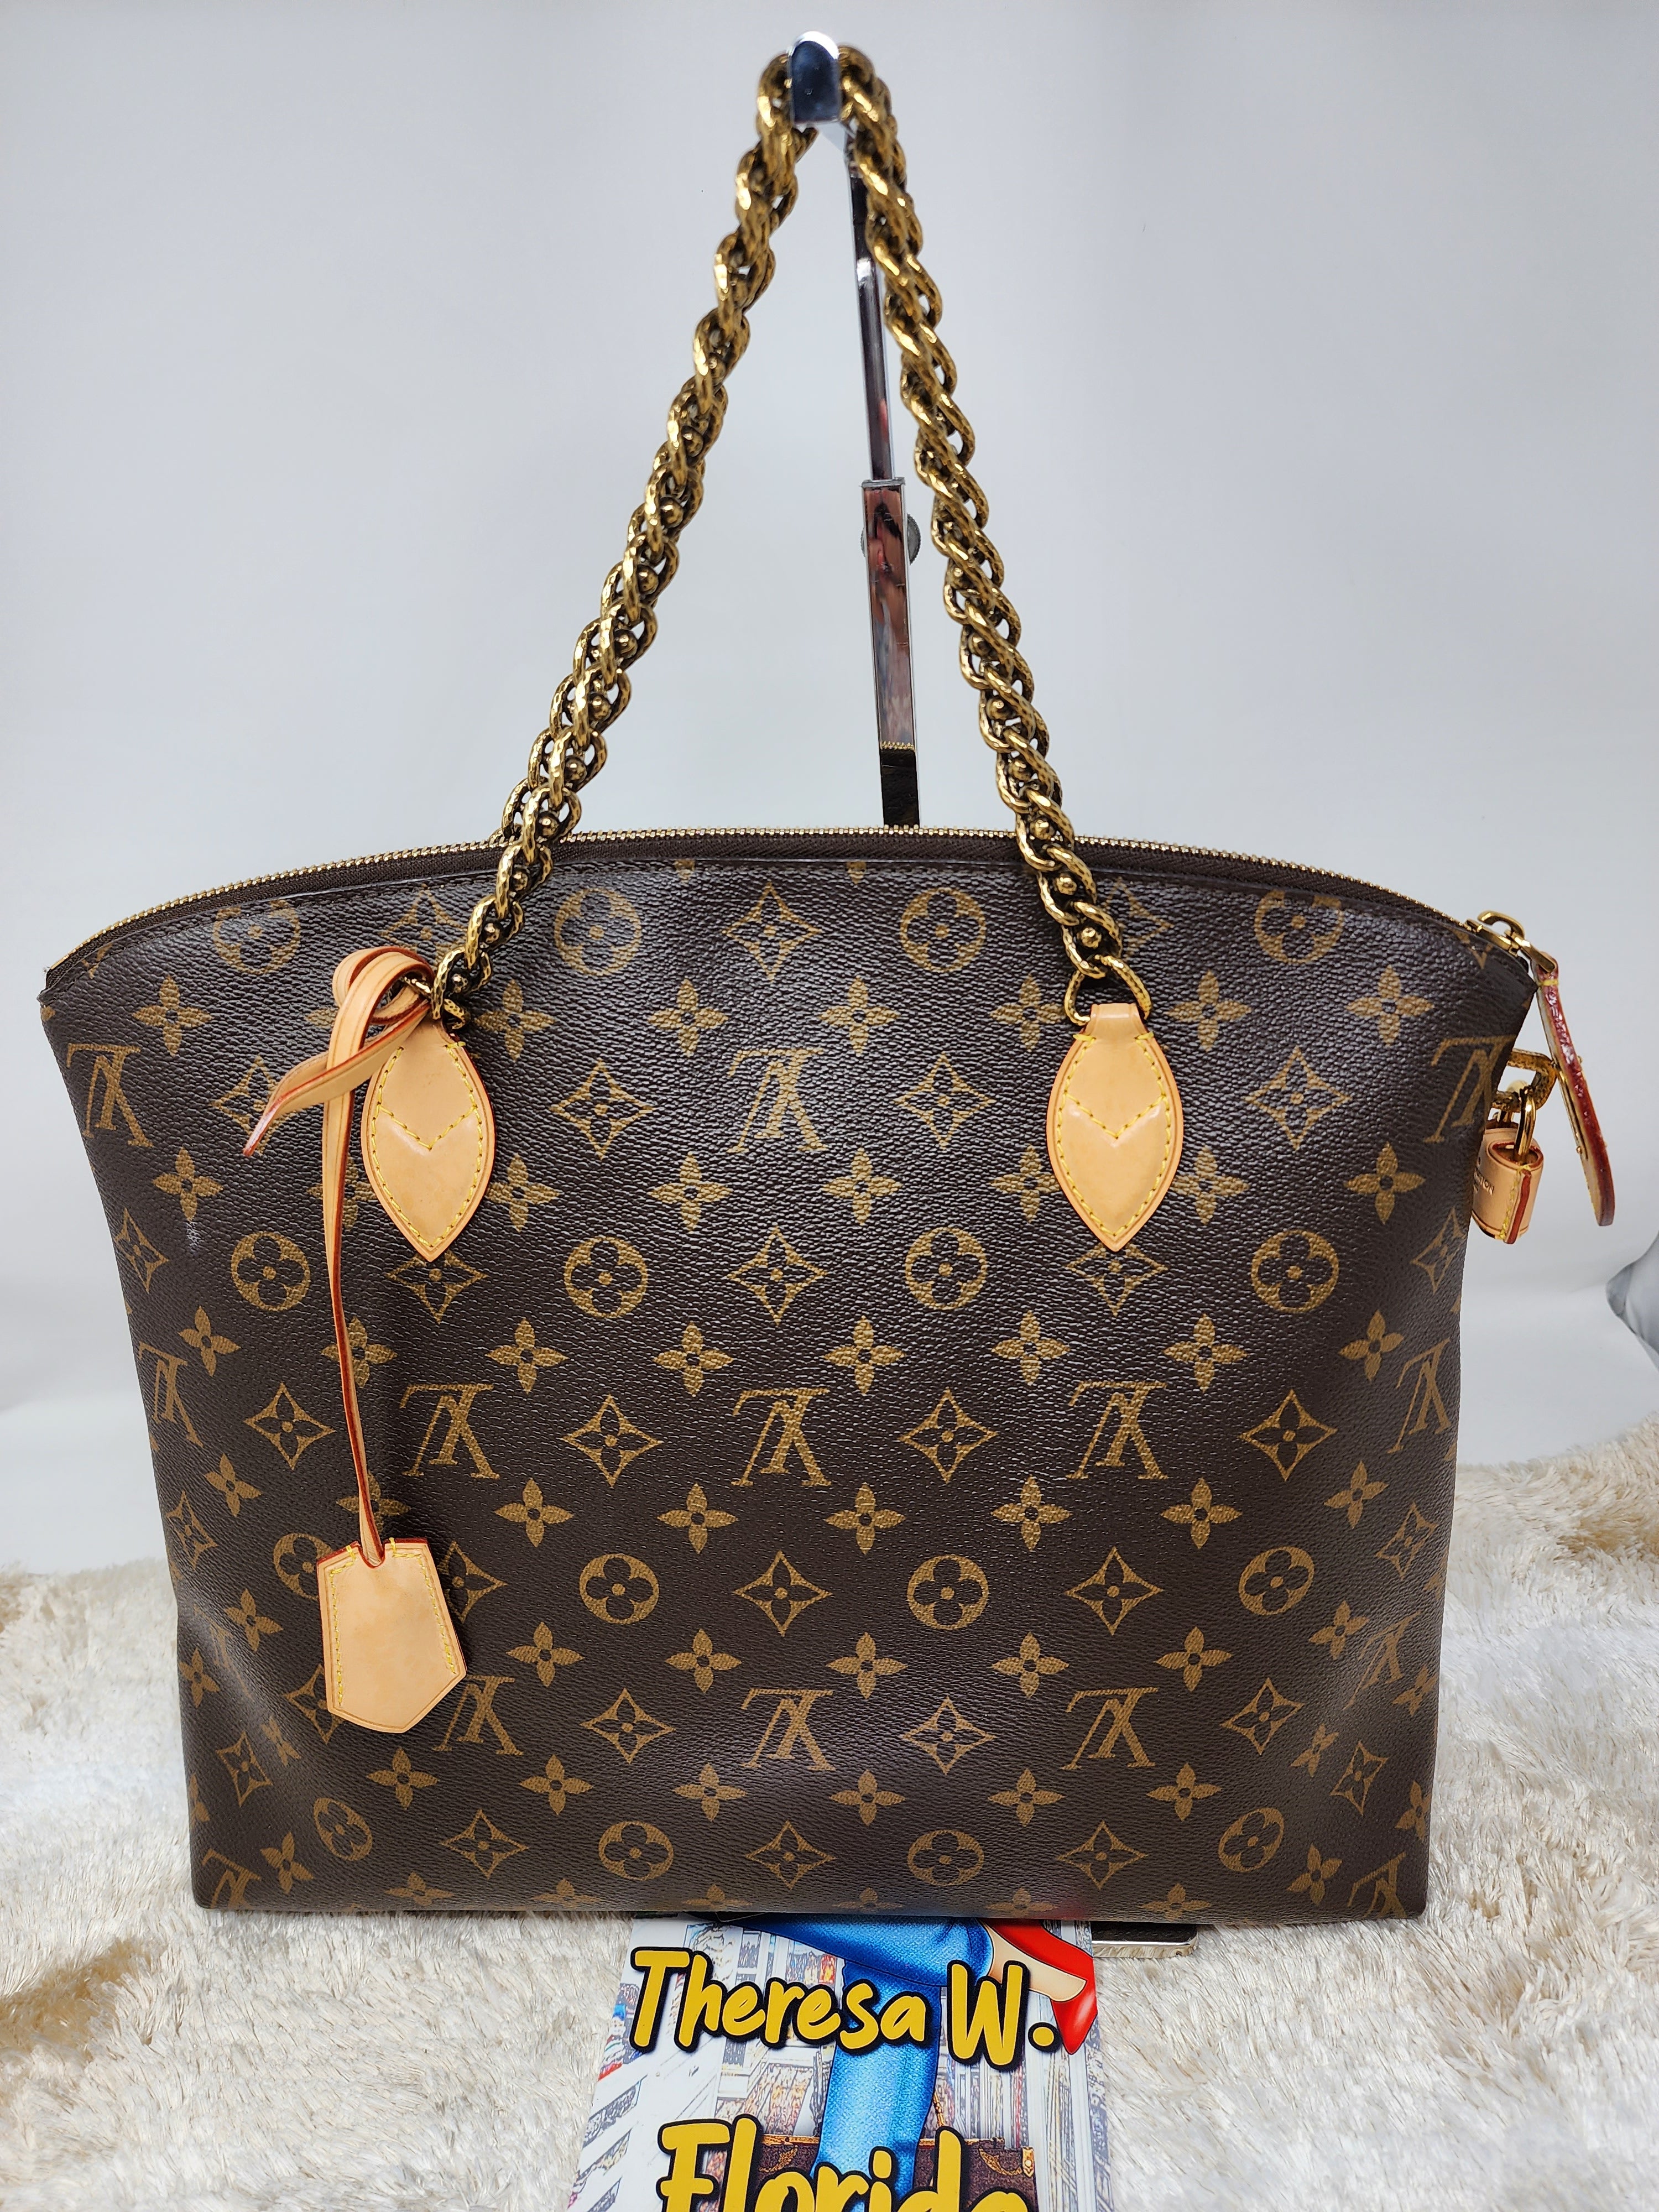 Louis Vuitton Lockit Chain Handbag